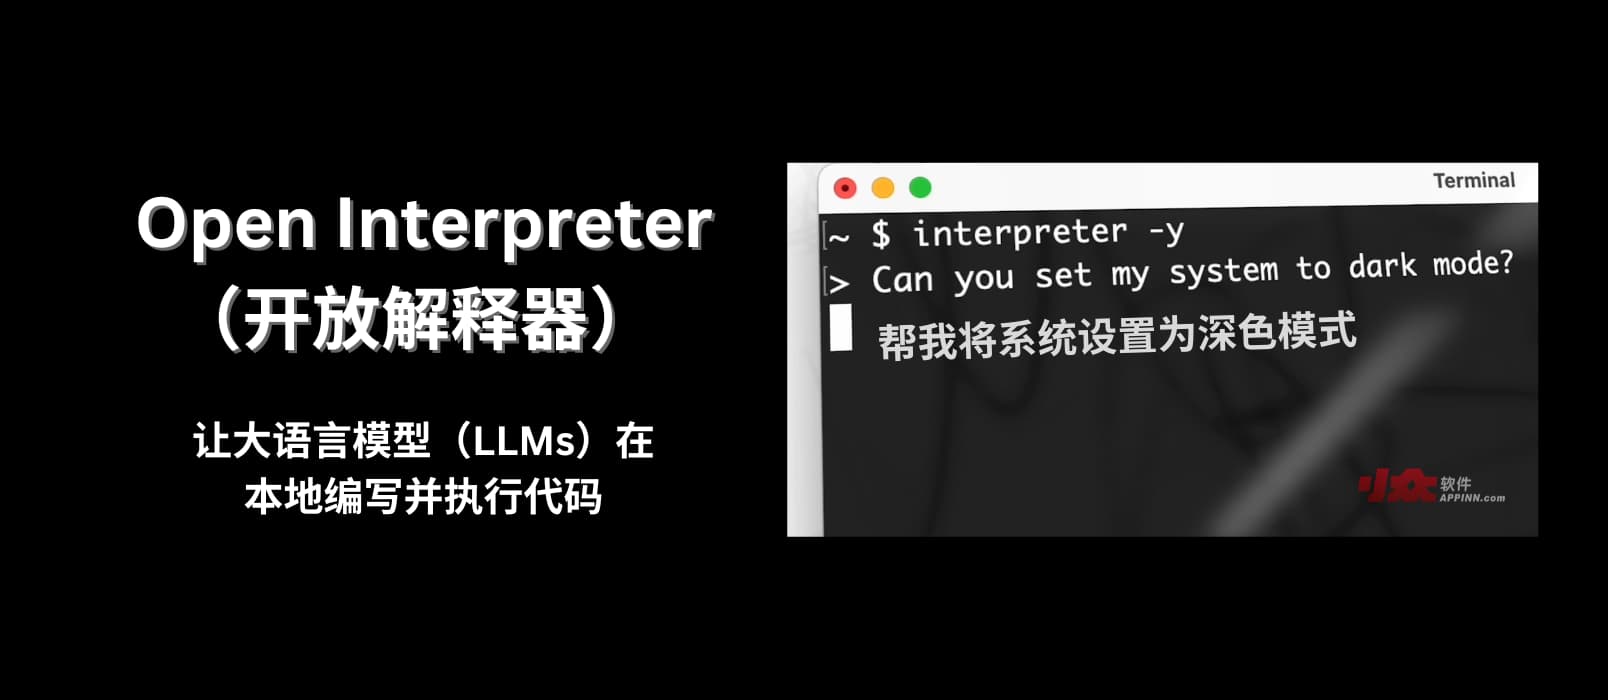 Open Interpreter - 可能门槛最低，让 AI 在你的电脑上执行代码 11